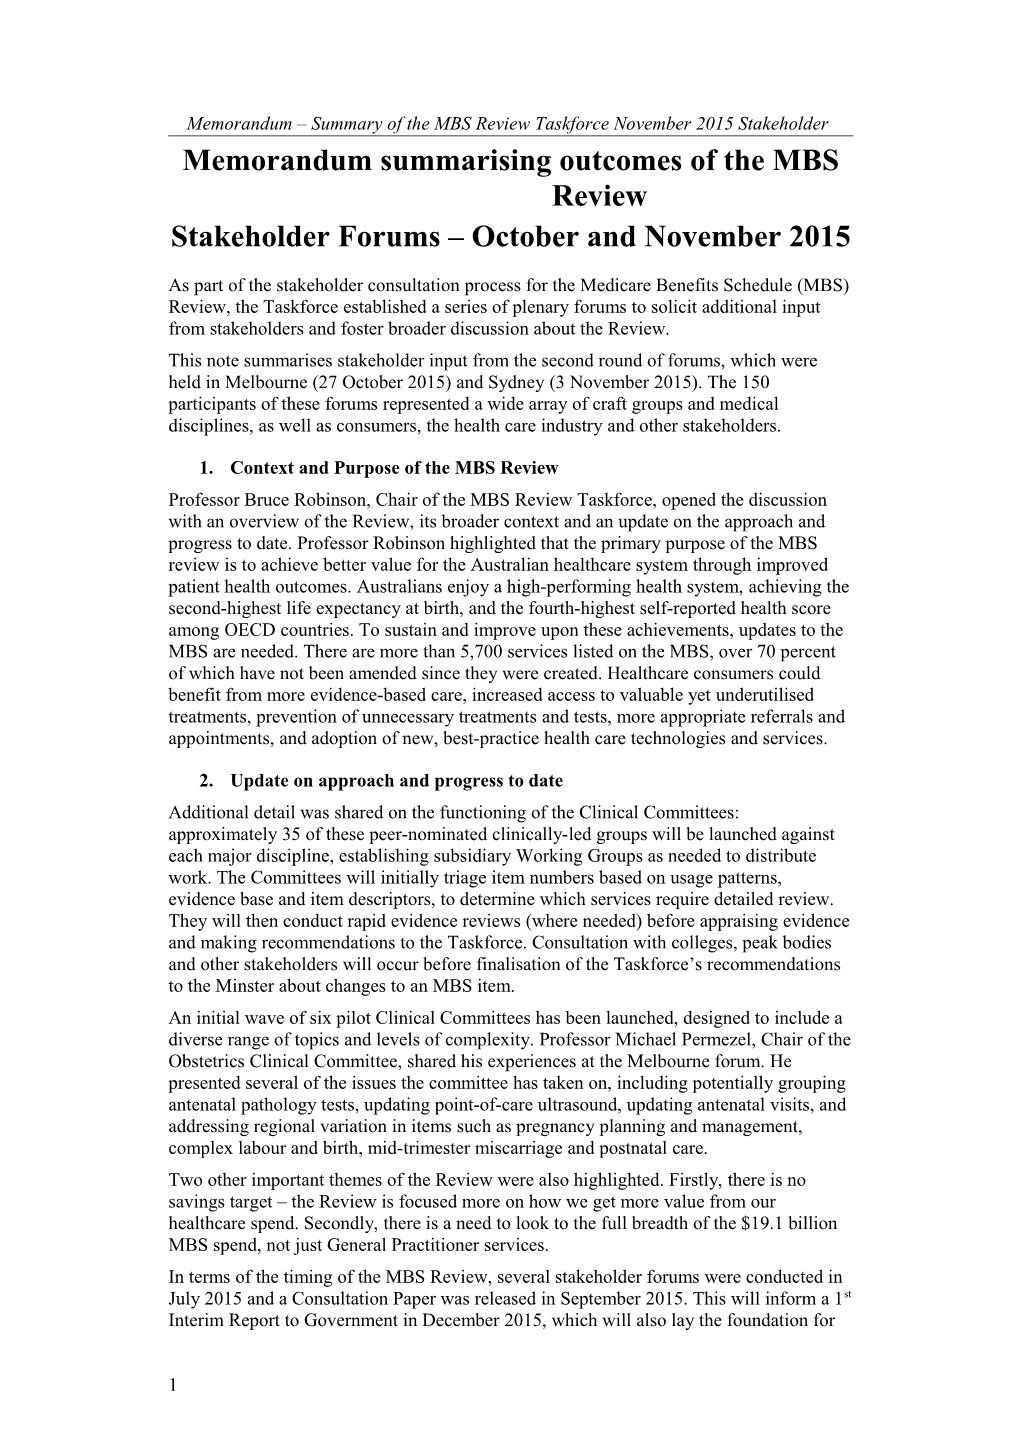 Memorandum - Summary of the MBS Review Taskforce November 2015 Stakeholder Forums